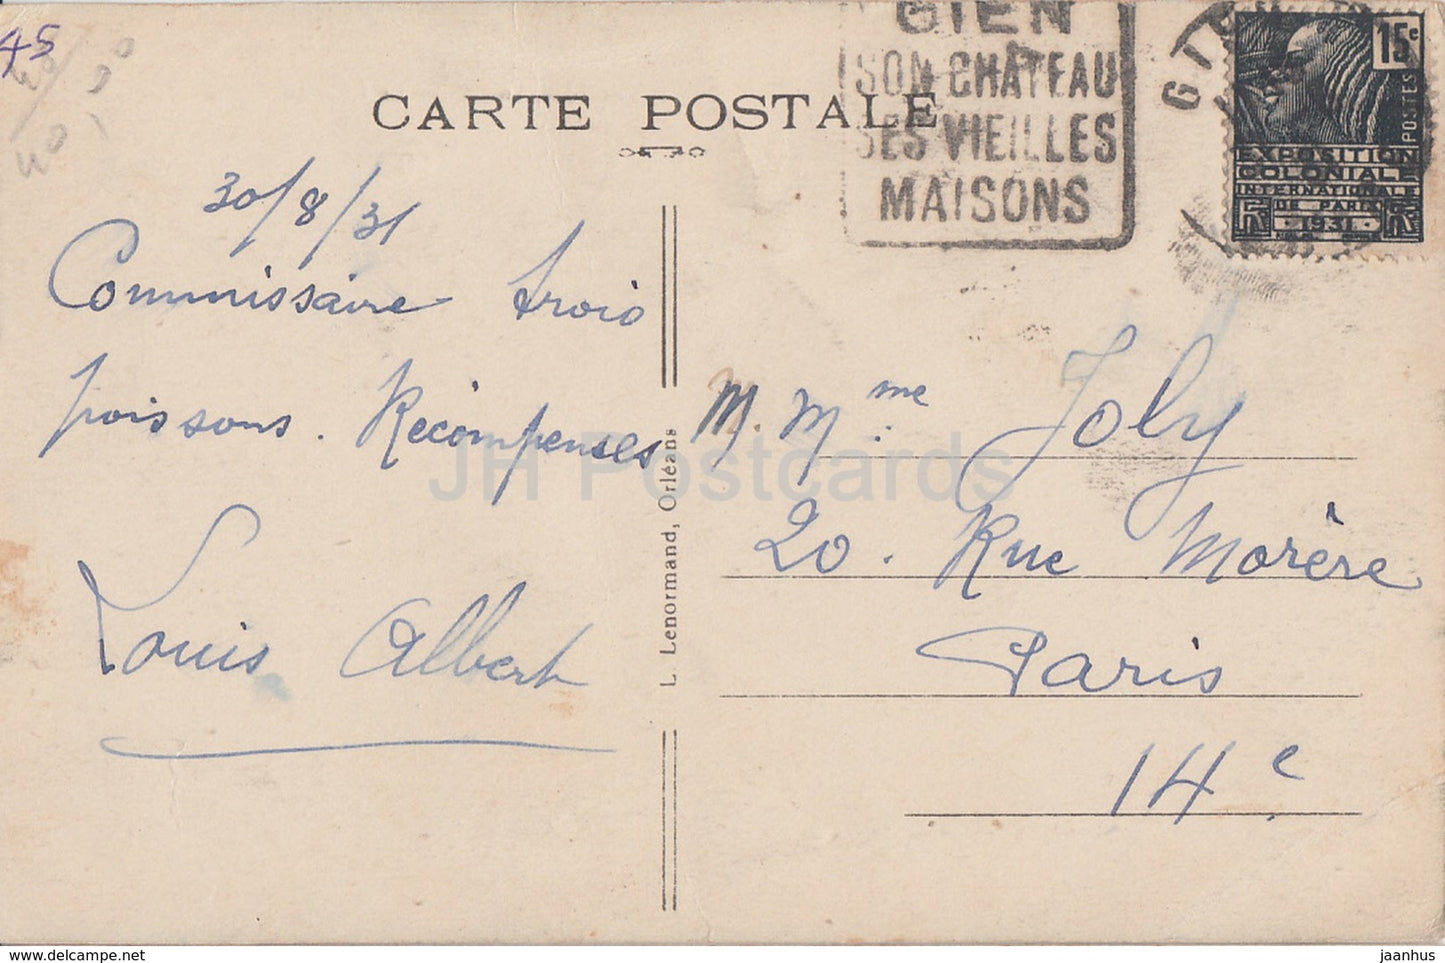 Gien - Le Chateau - Schloss - 3601 - alte Postkarte - 1931 - Frankreich - gebraucht